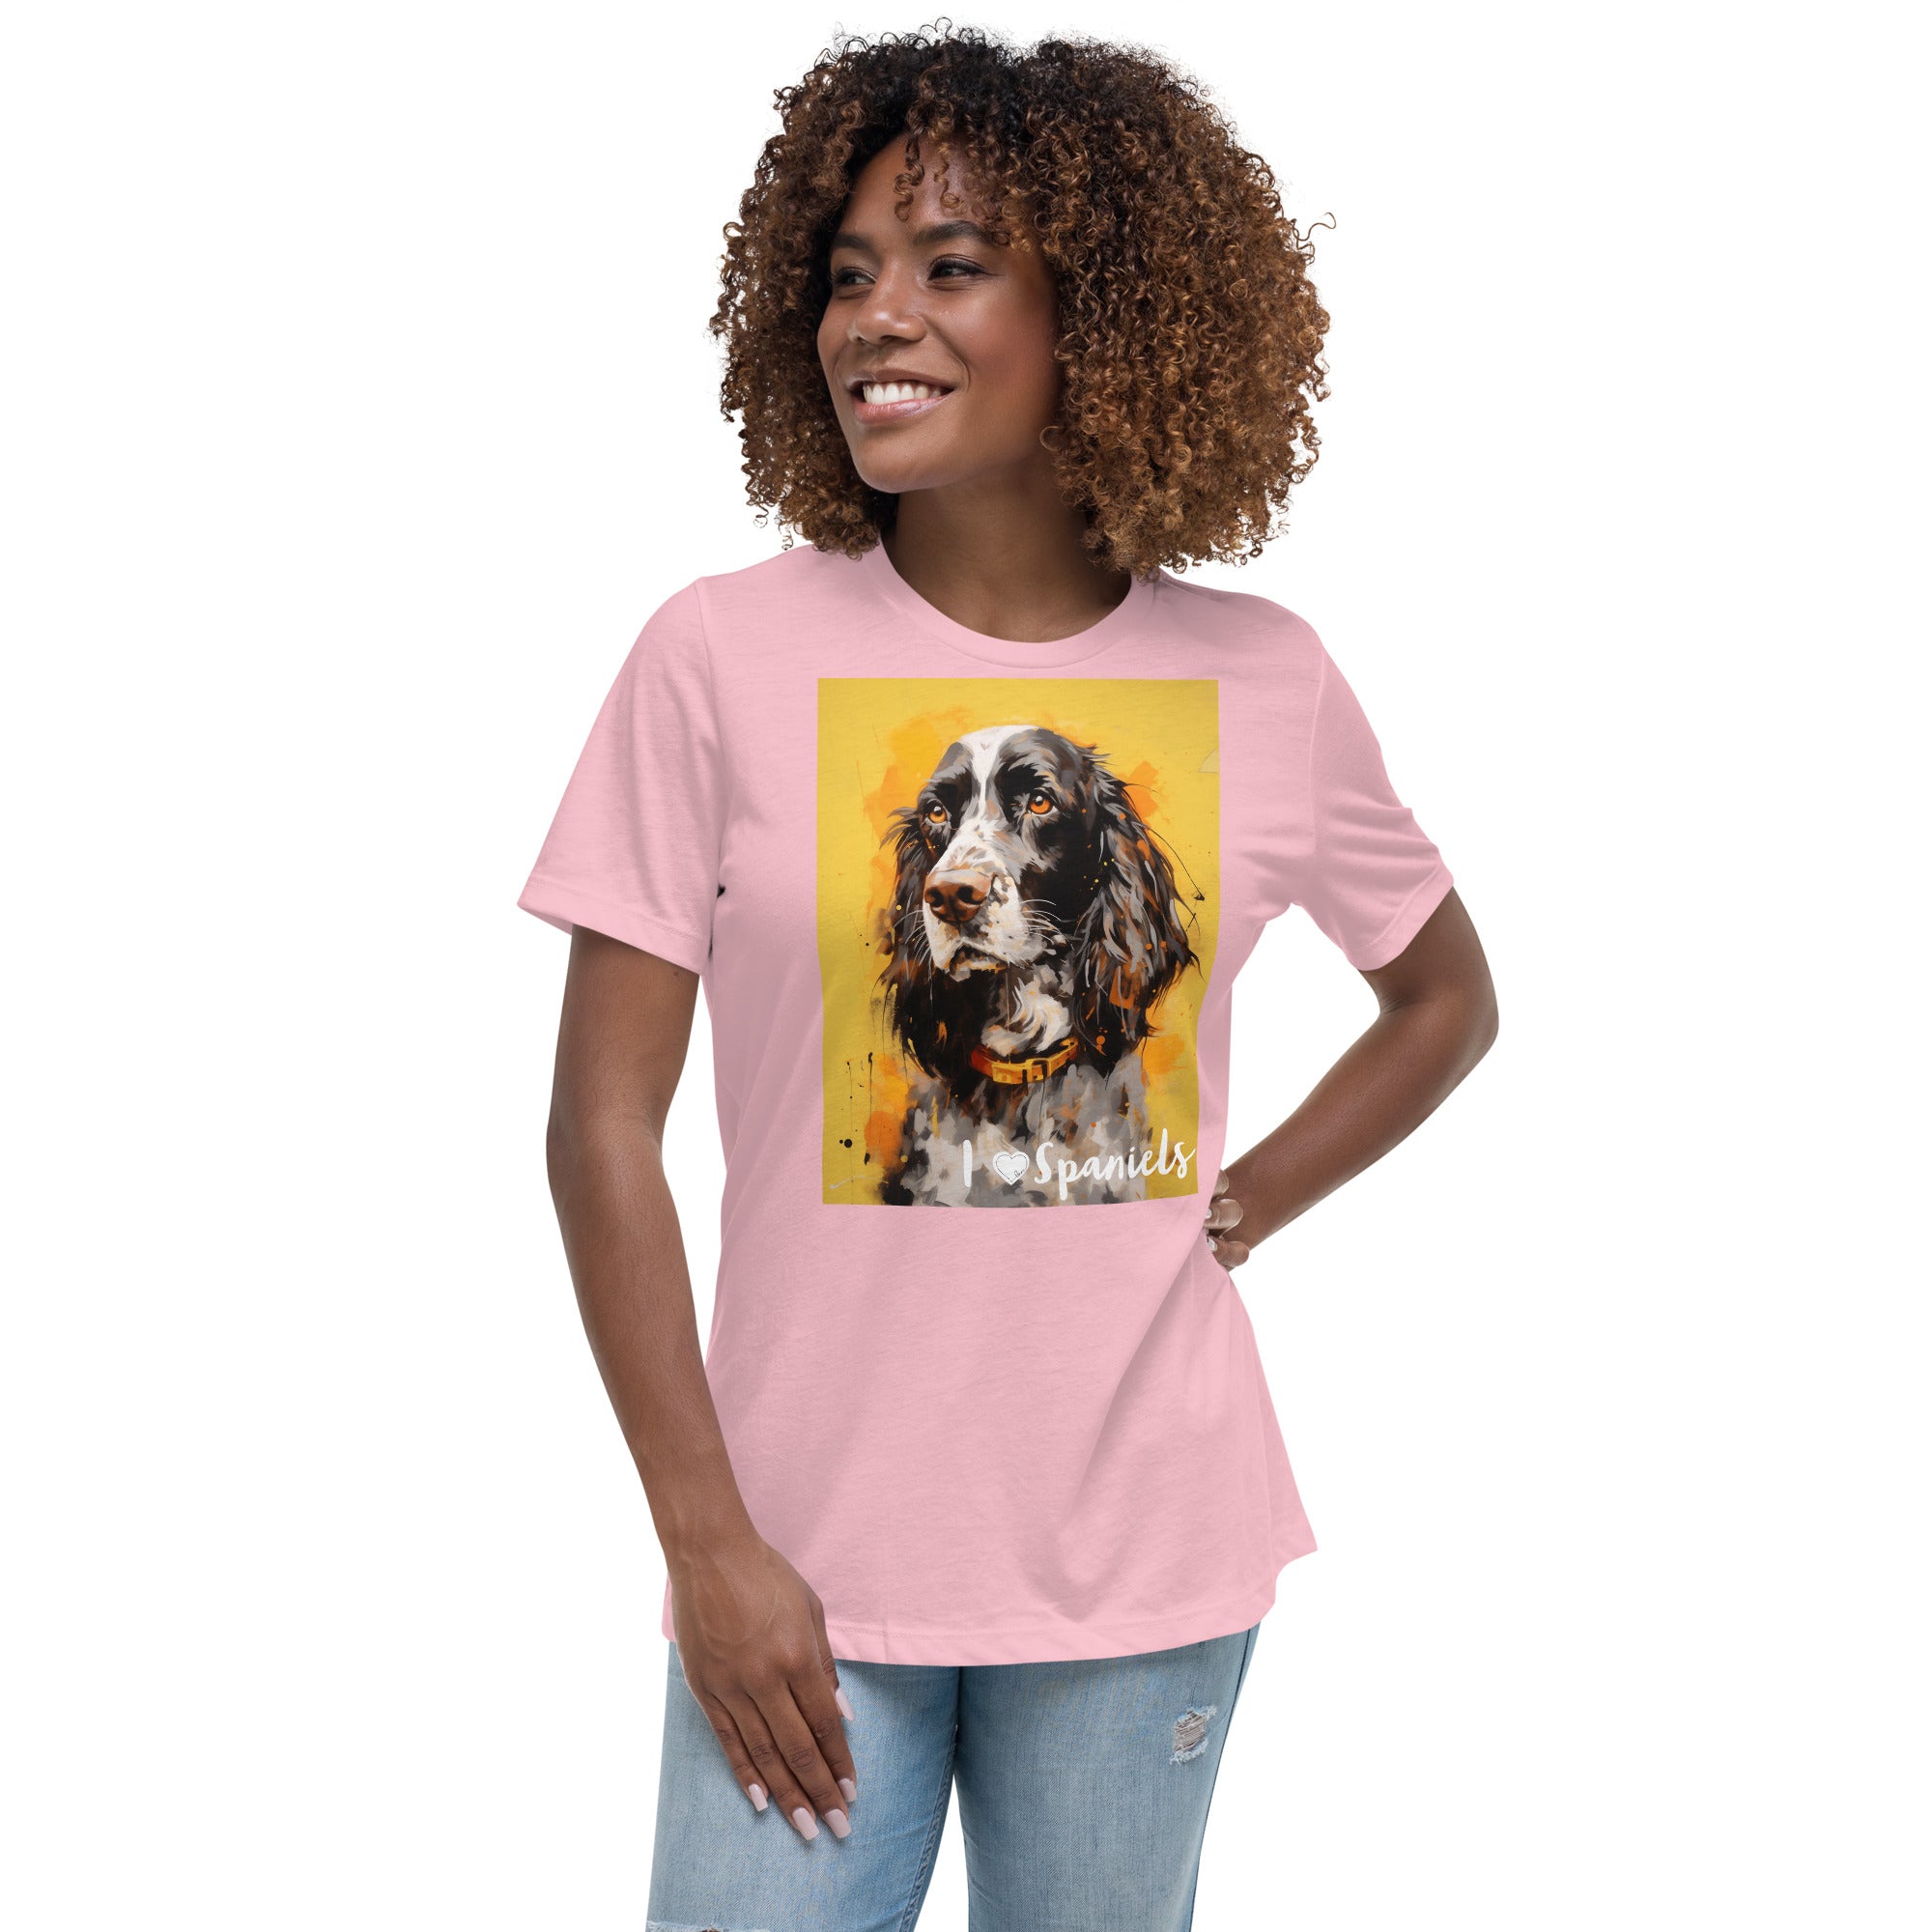 Women's Relaxed T-Shirt - I ❤ Dogs - Cocker Spaniel (American)